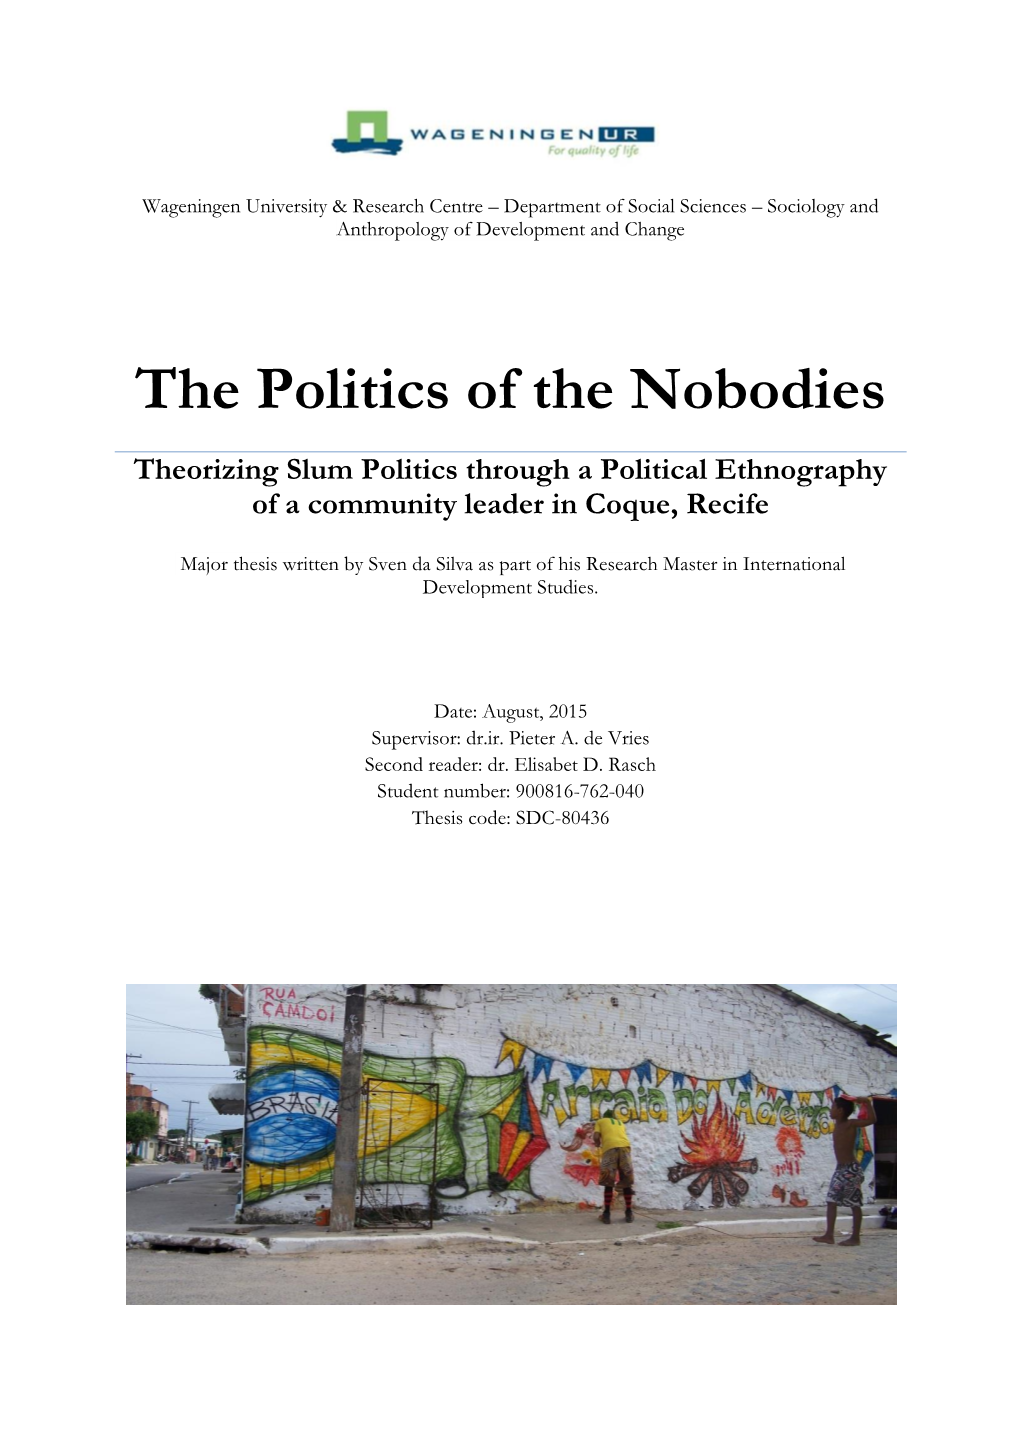 The Politics of the Nobodies